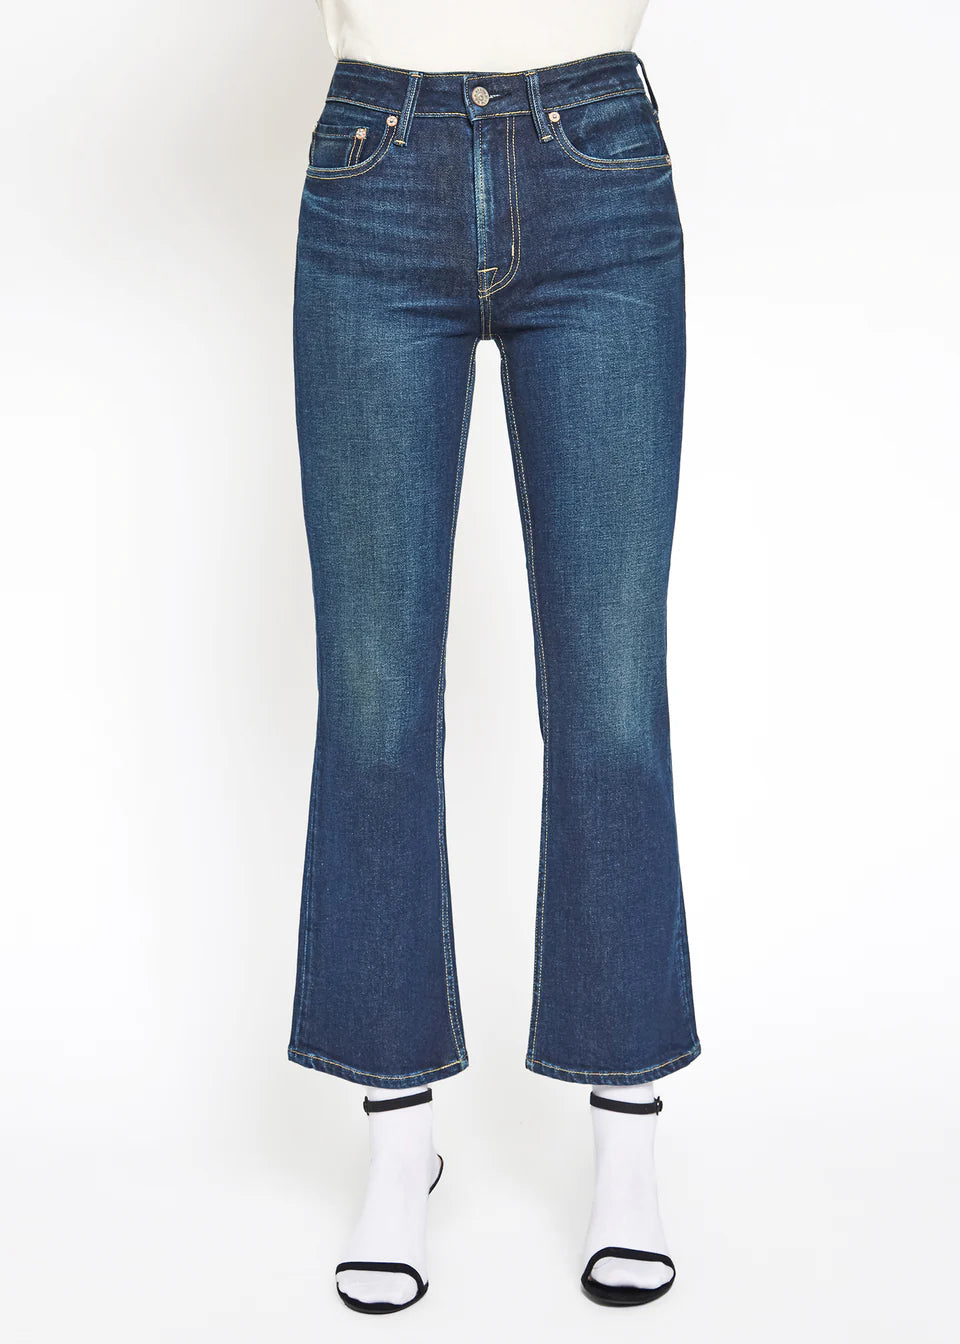 NOEND – Farrah Kick Flare Jeans in Bedford